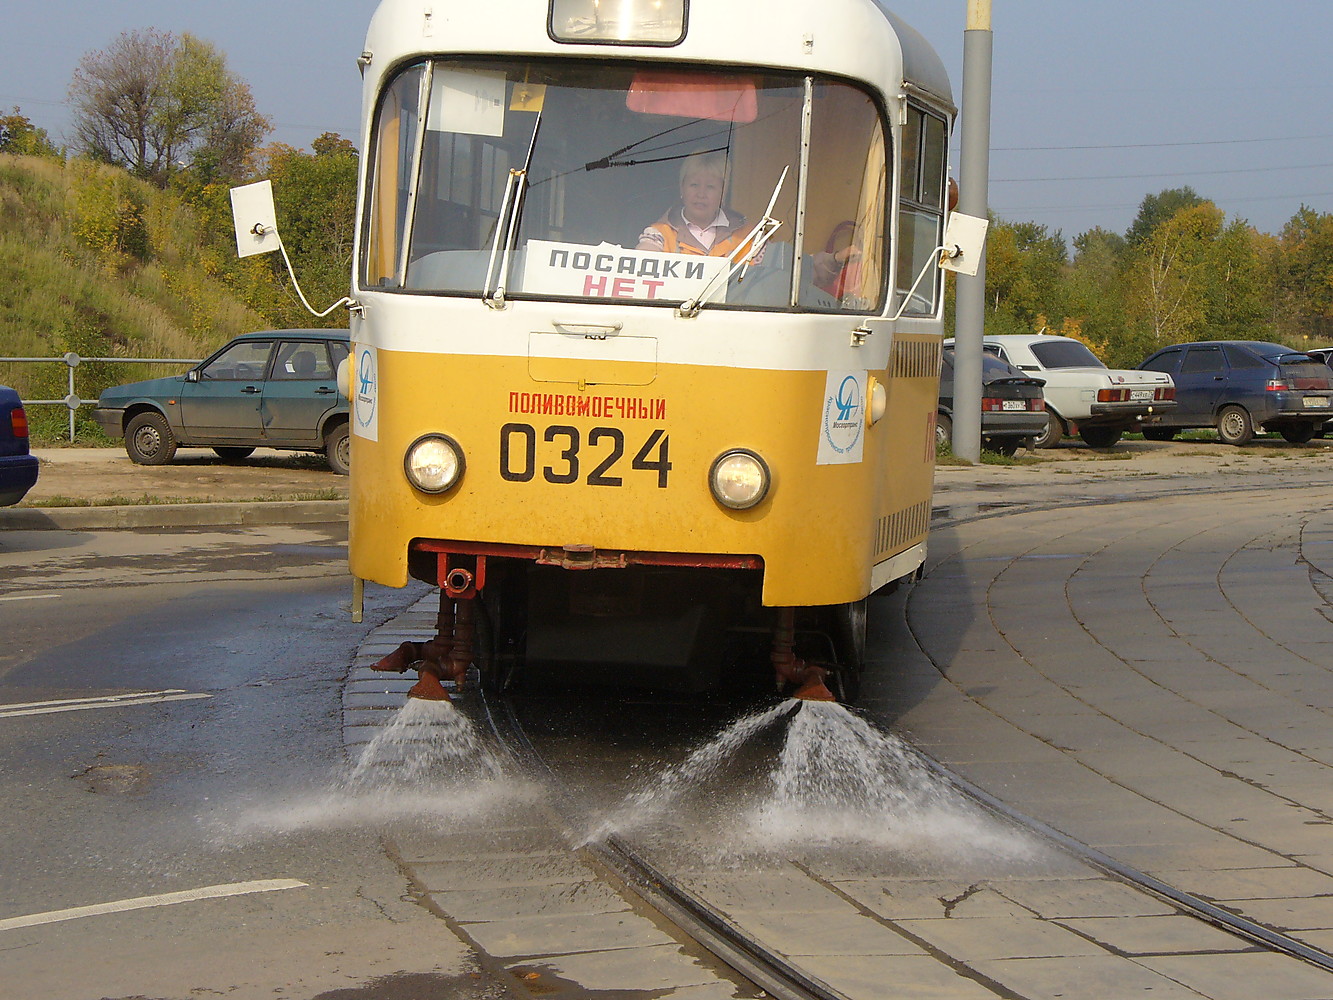 Moszkva, Tatra T3SU — 0324